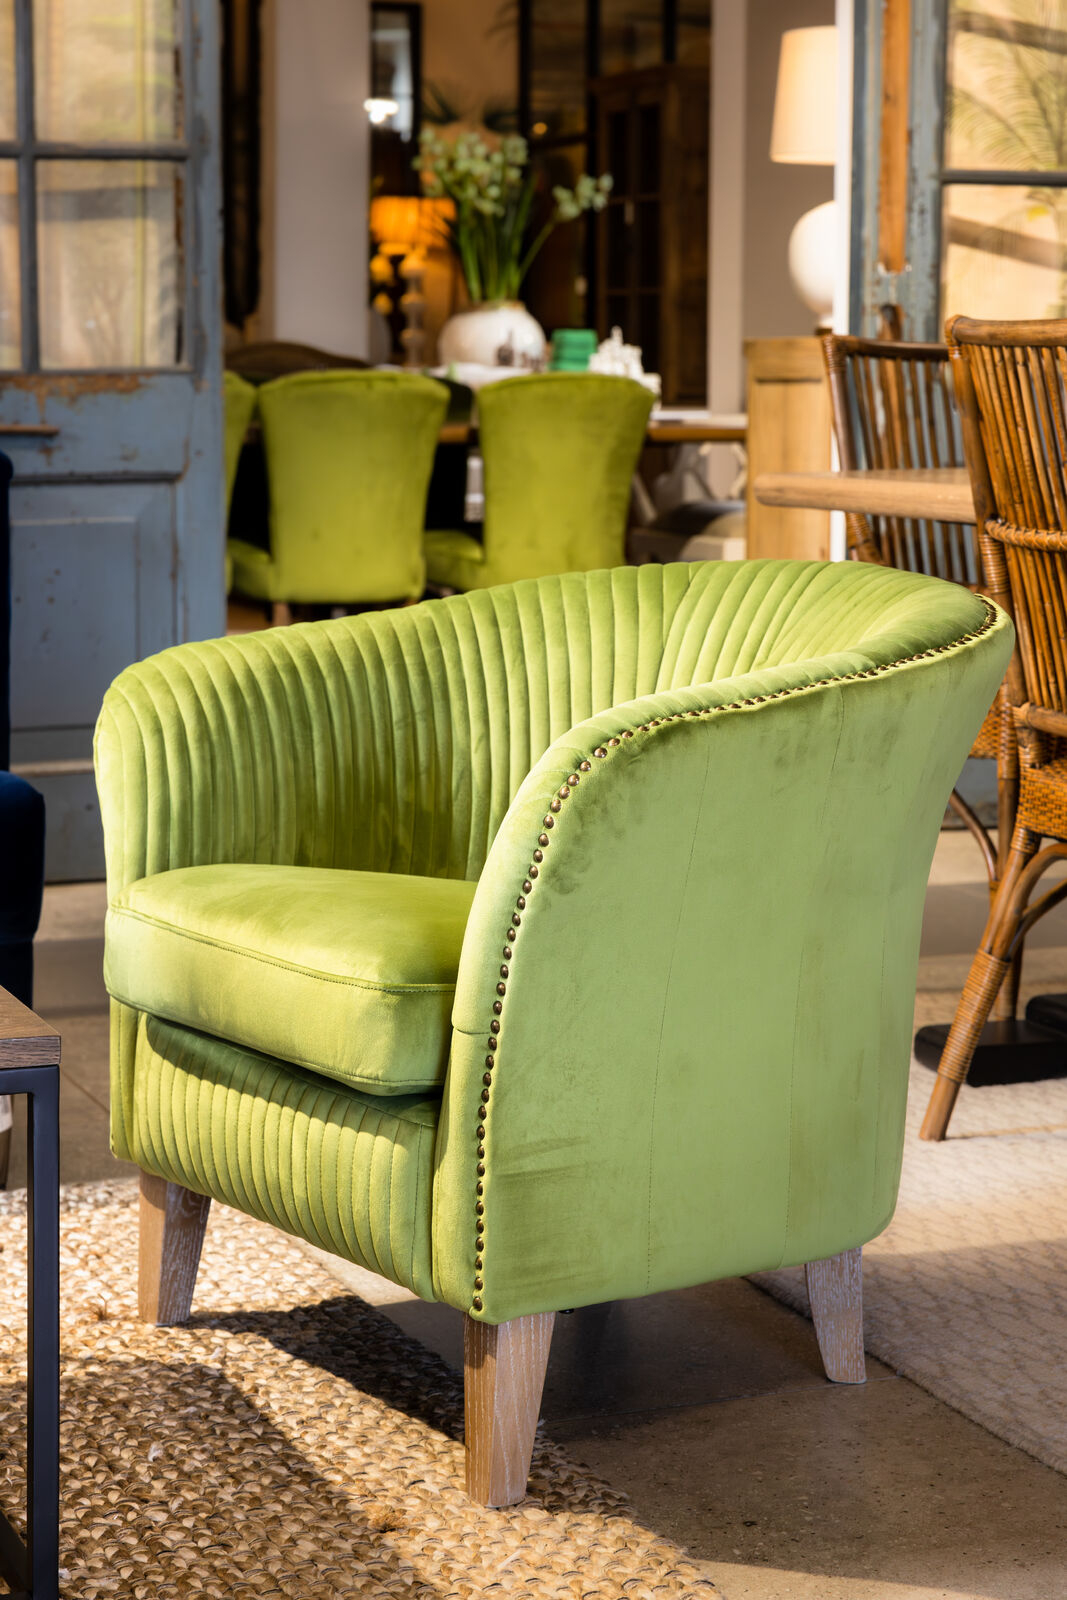 Green velvet tub armchair with stud detail